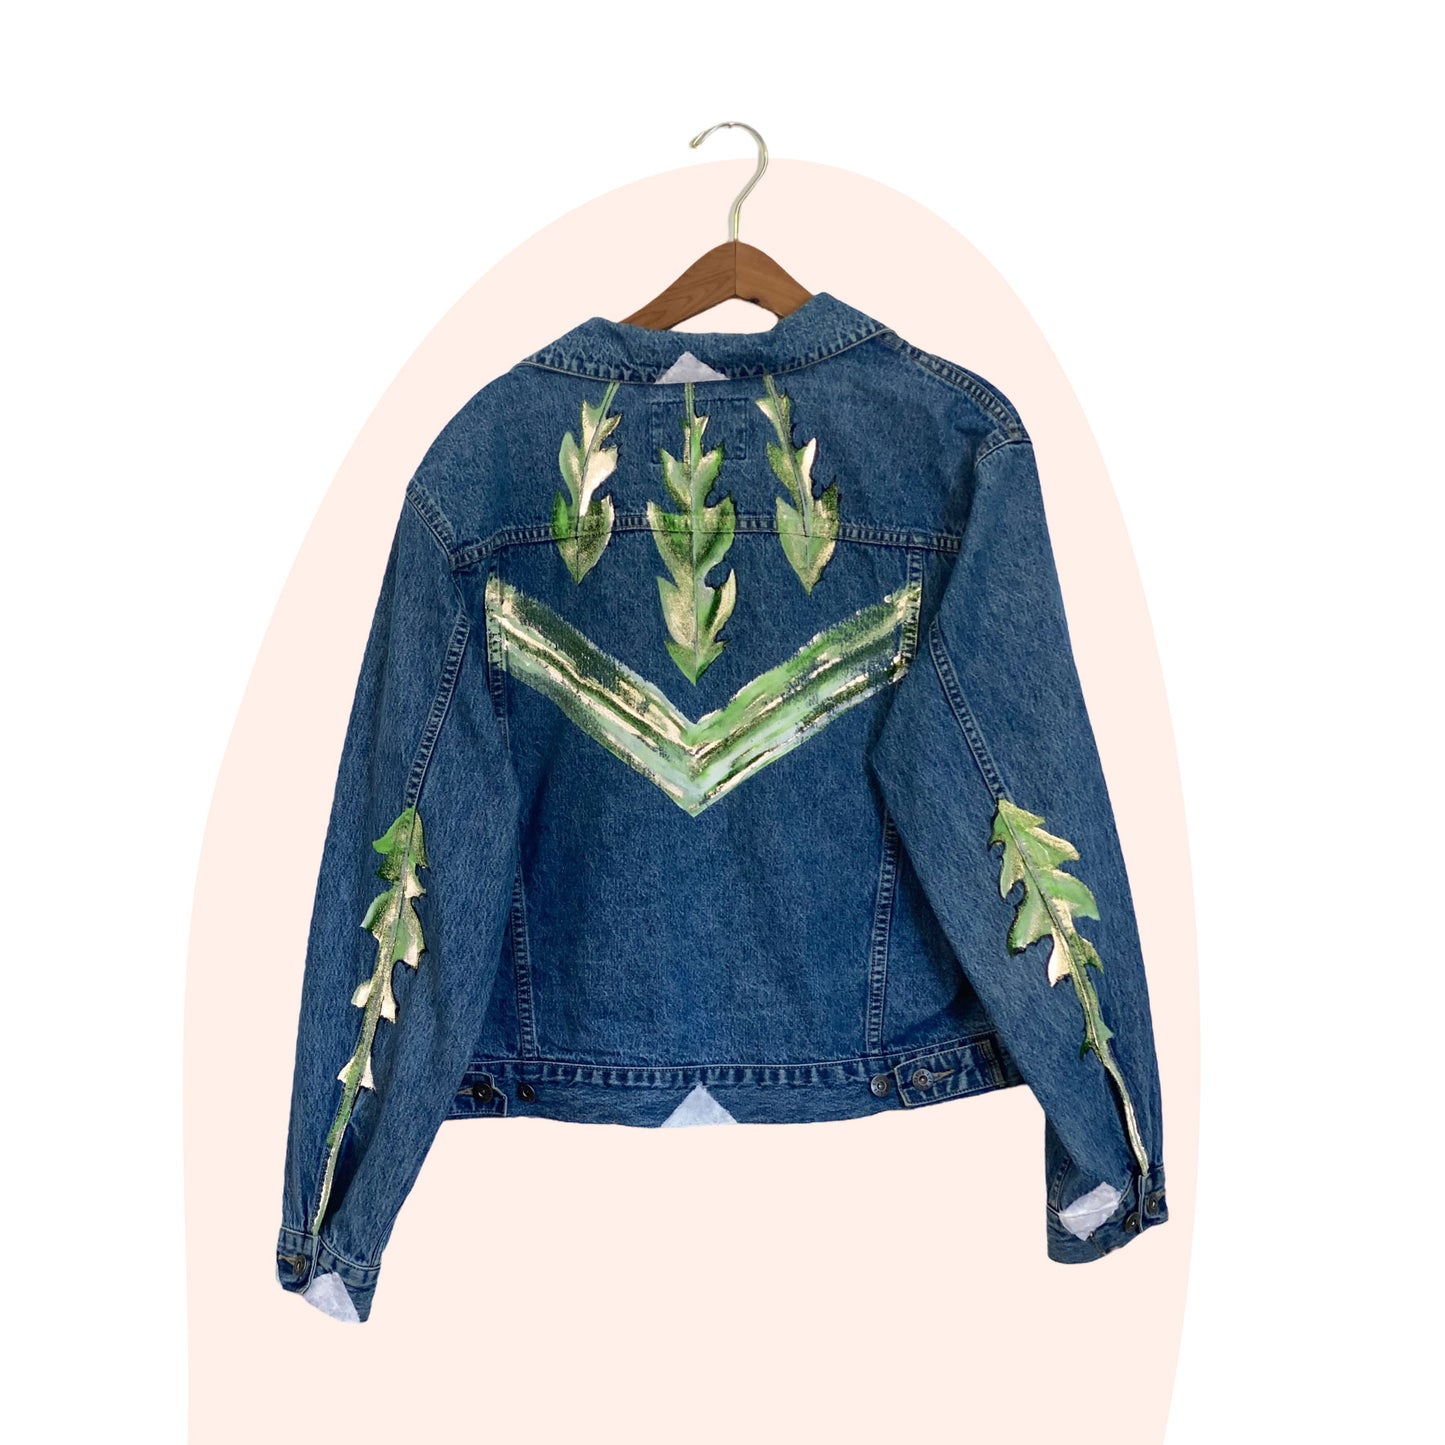 Reflective Jacket #15 - Dandelion Dream - Size M